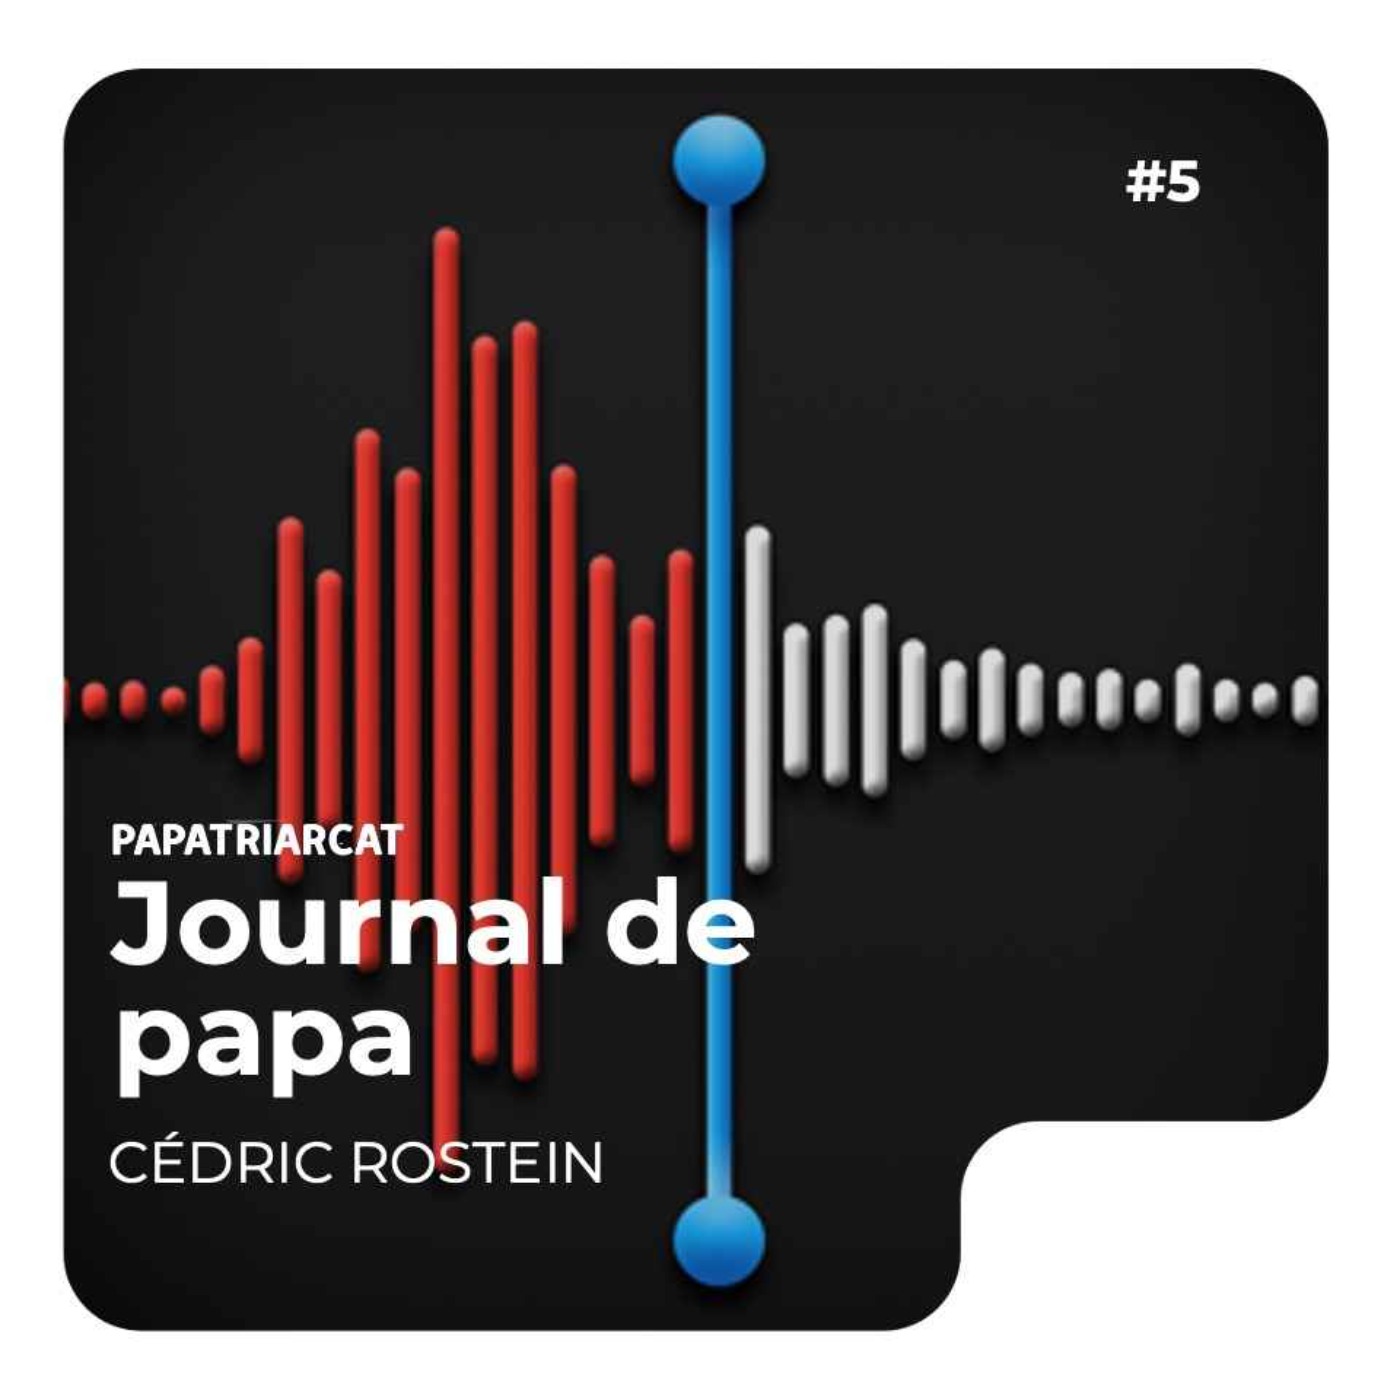 Journal de papa #5